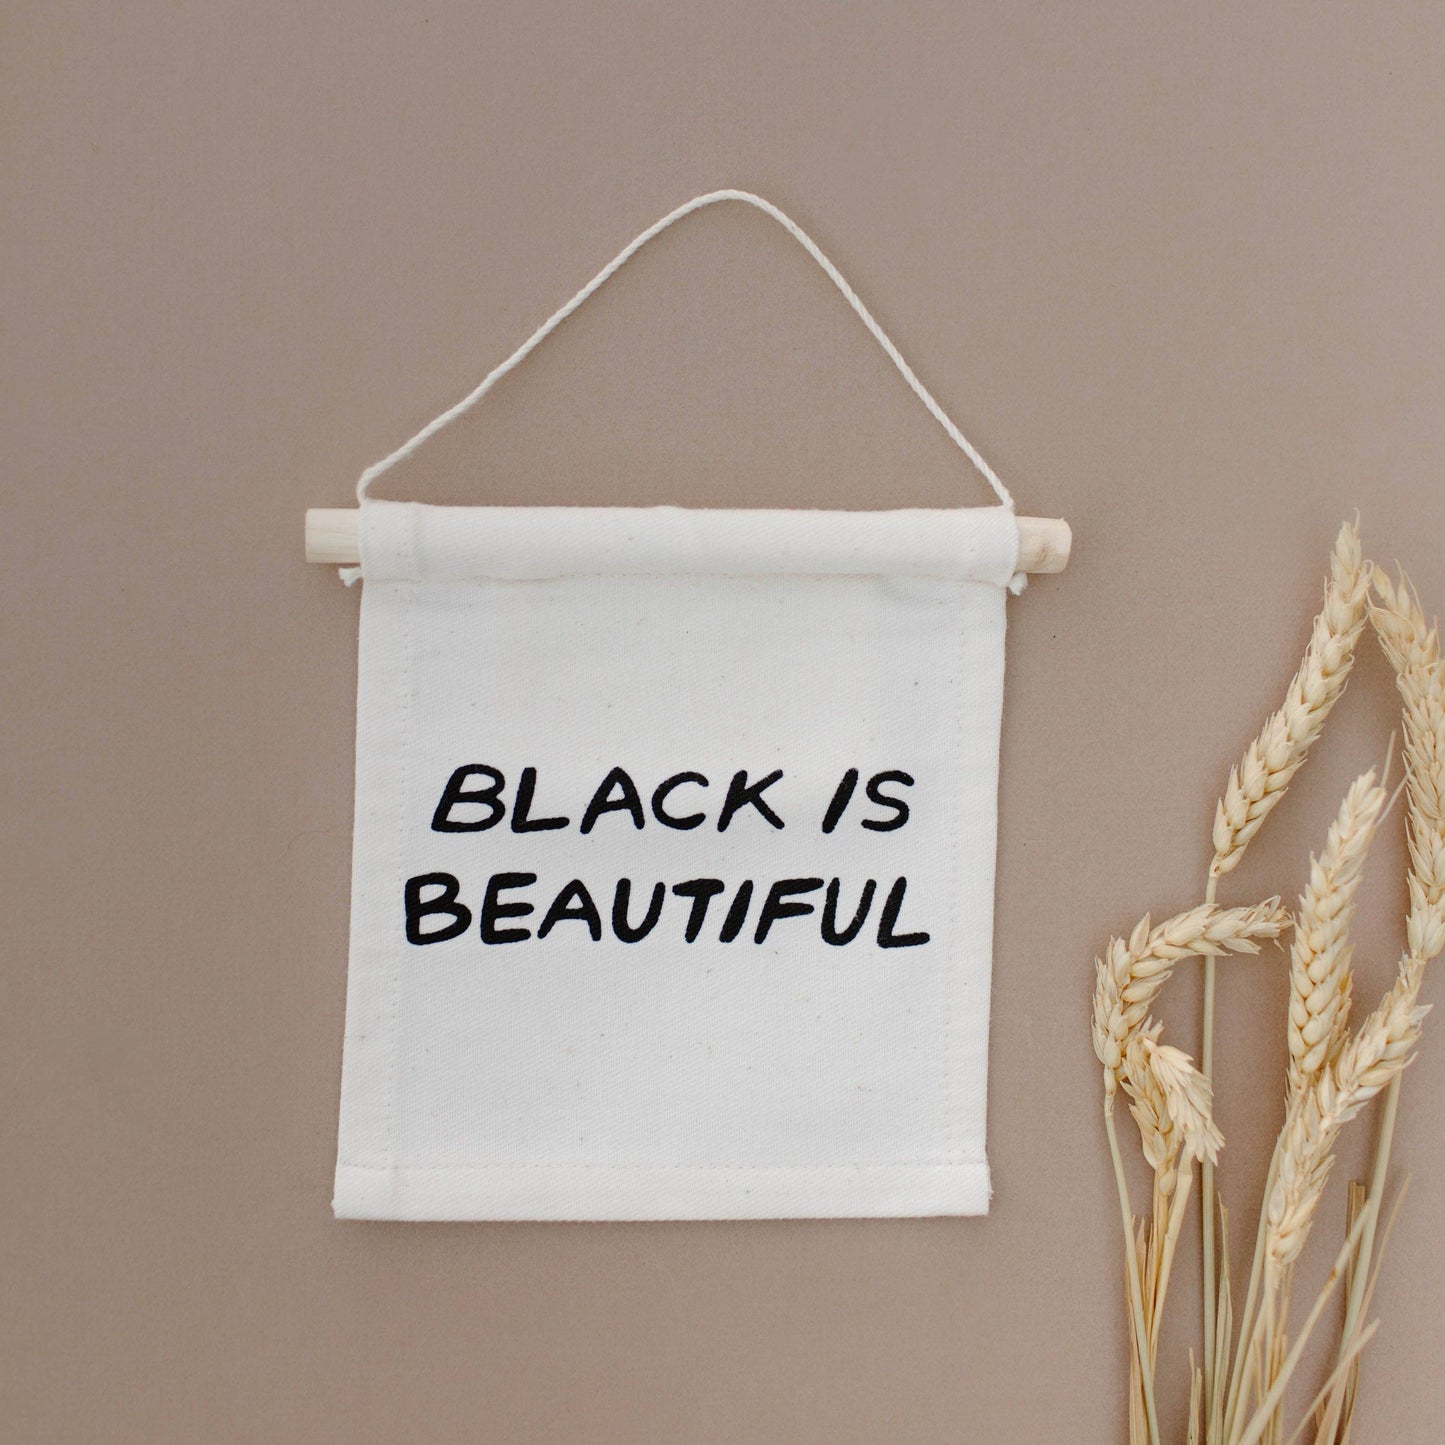 Black is beautiful hang sign